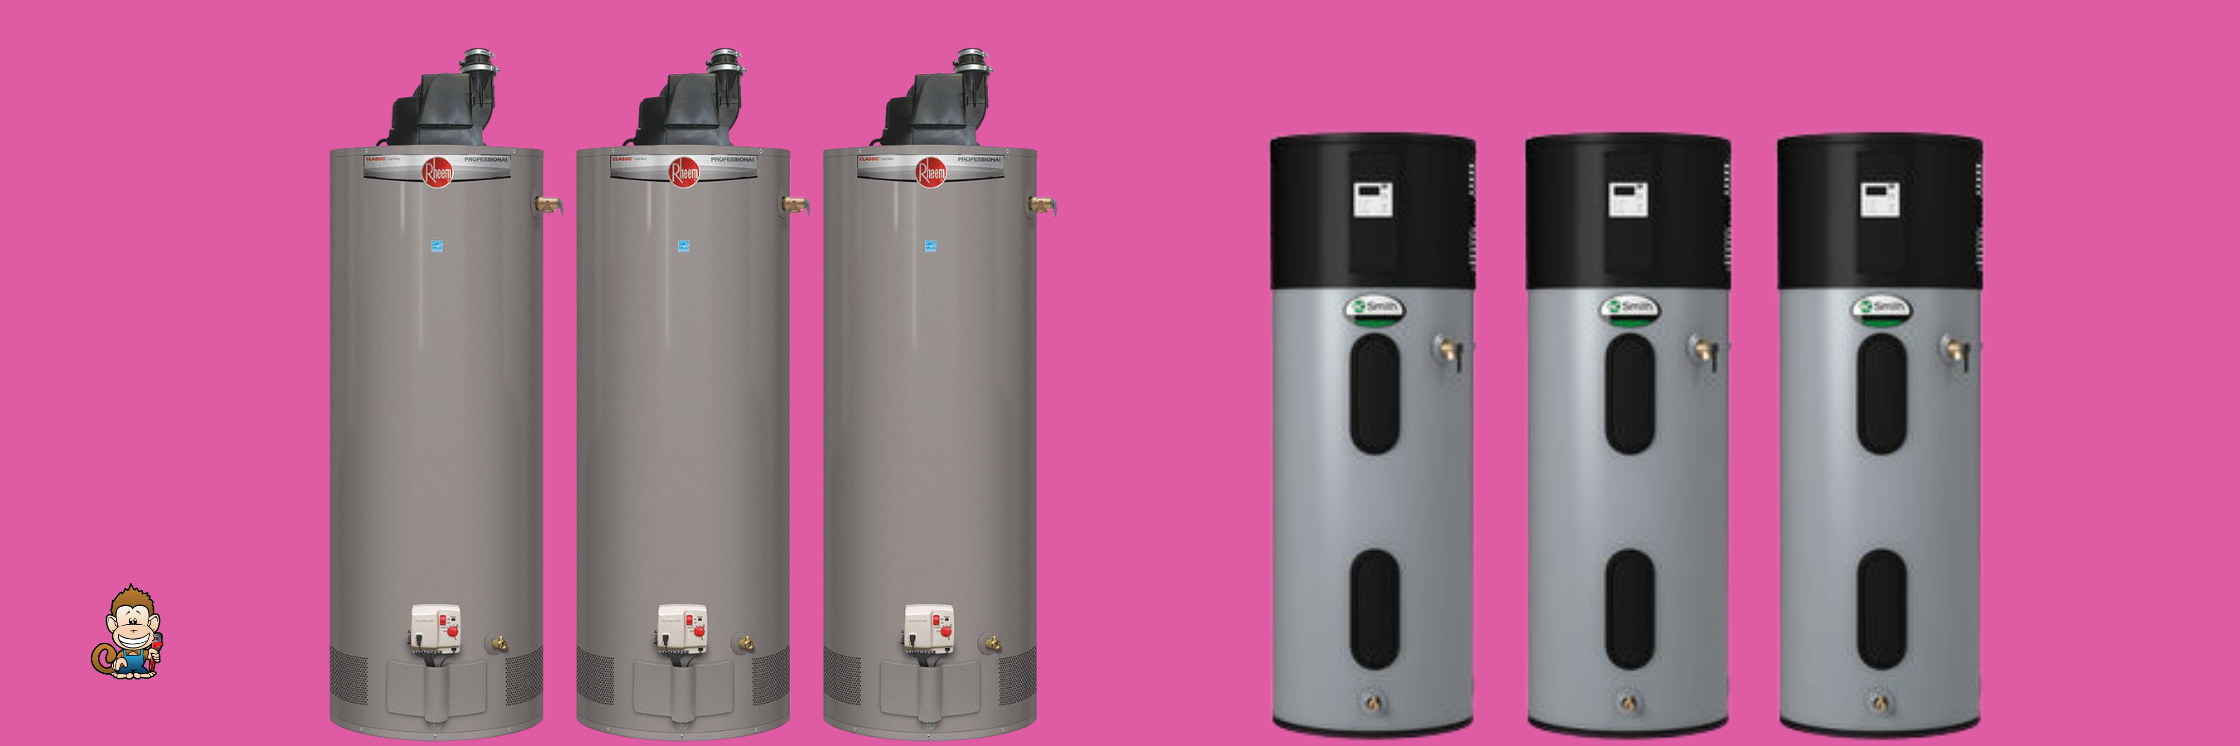 Conventional Water Heater vs. Heat Pump Water Heater